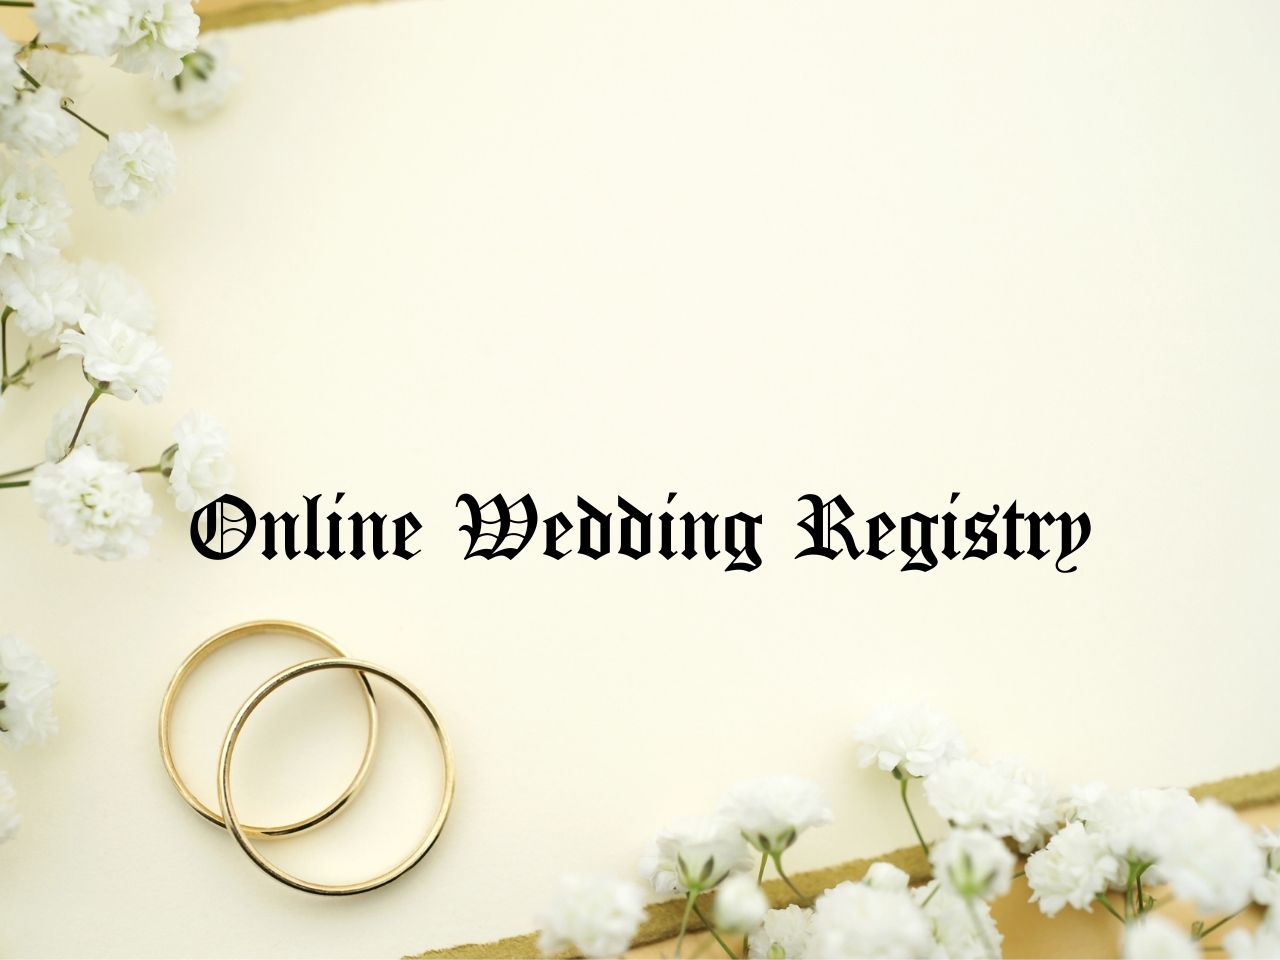 Online Wedding Registry